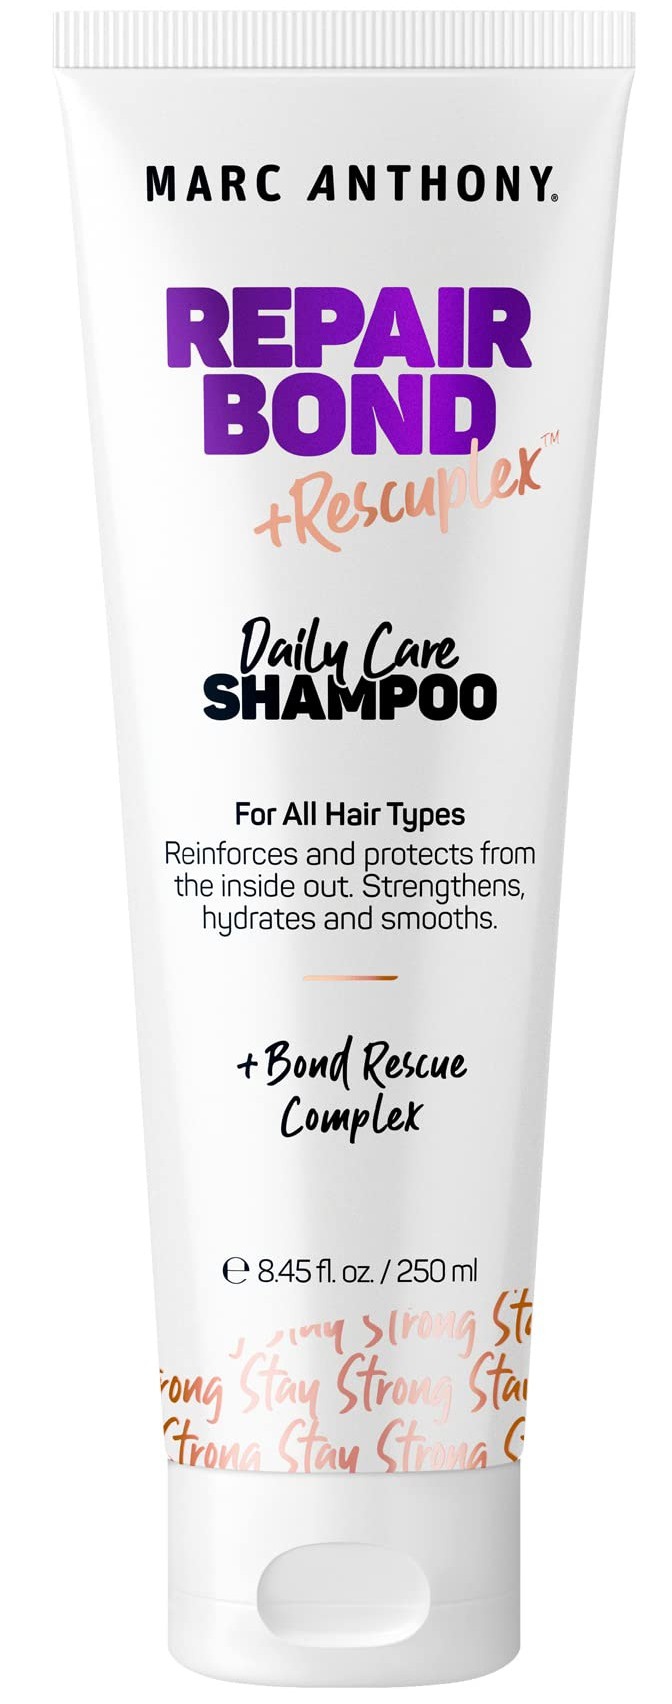 Marc Anthony Bond Repair And Rescuplex Shampoo